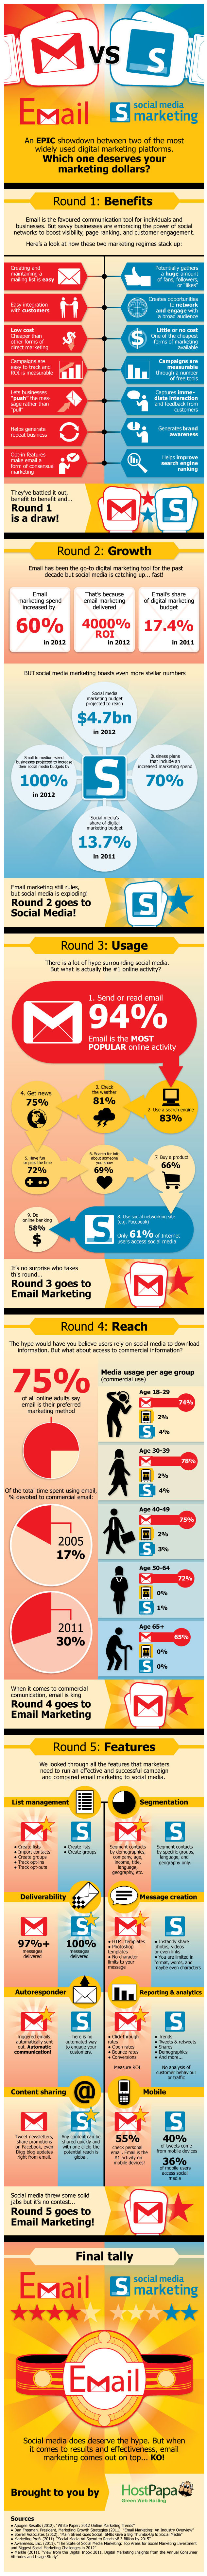 Email-vs-Social-Media-Infographic